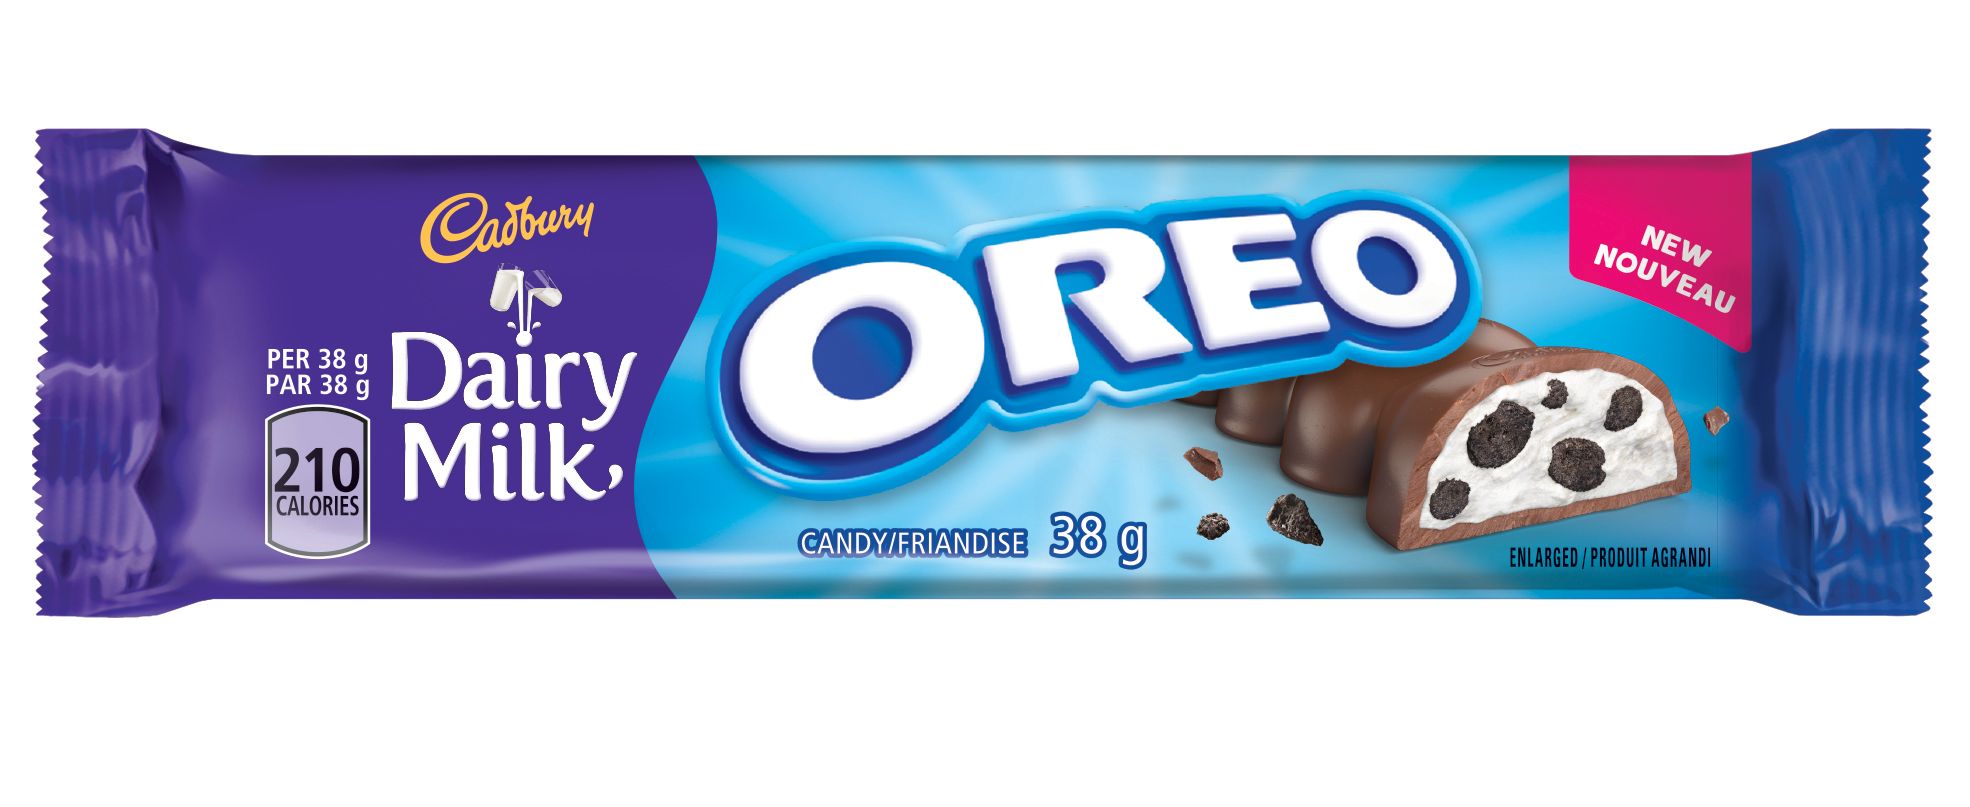 Cadbury Dairy Milk OREO, tablette de 38 g-4